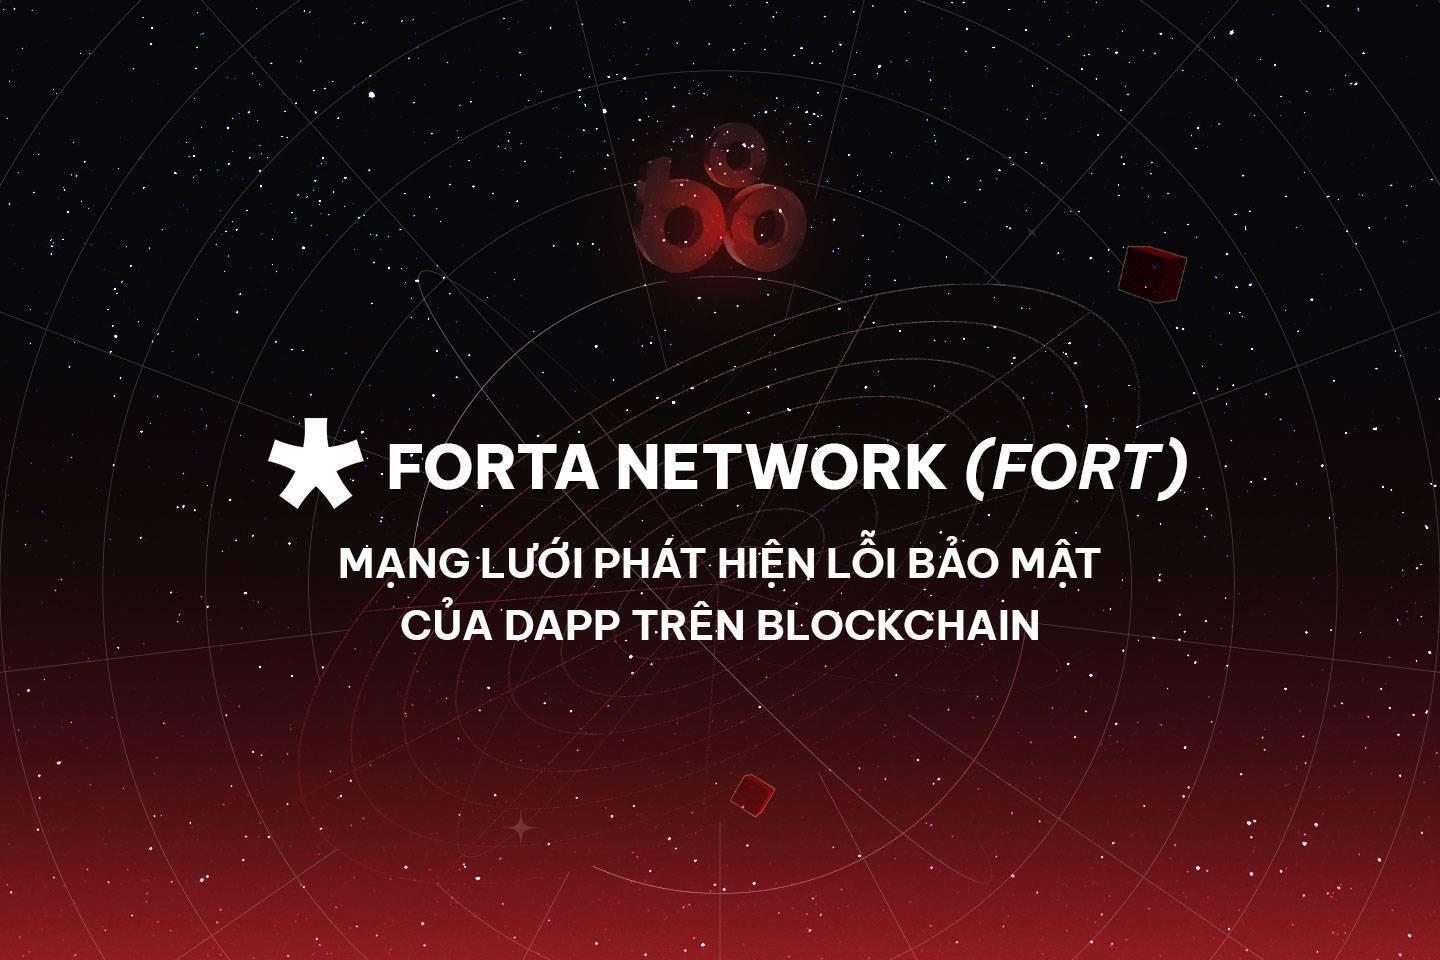 forta-network-fort-mang-luoi-phat-hien-loi-bao-mat-cua-dapp-tren-blockchain